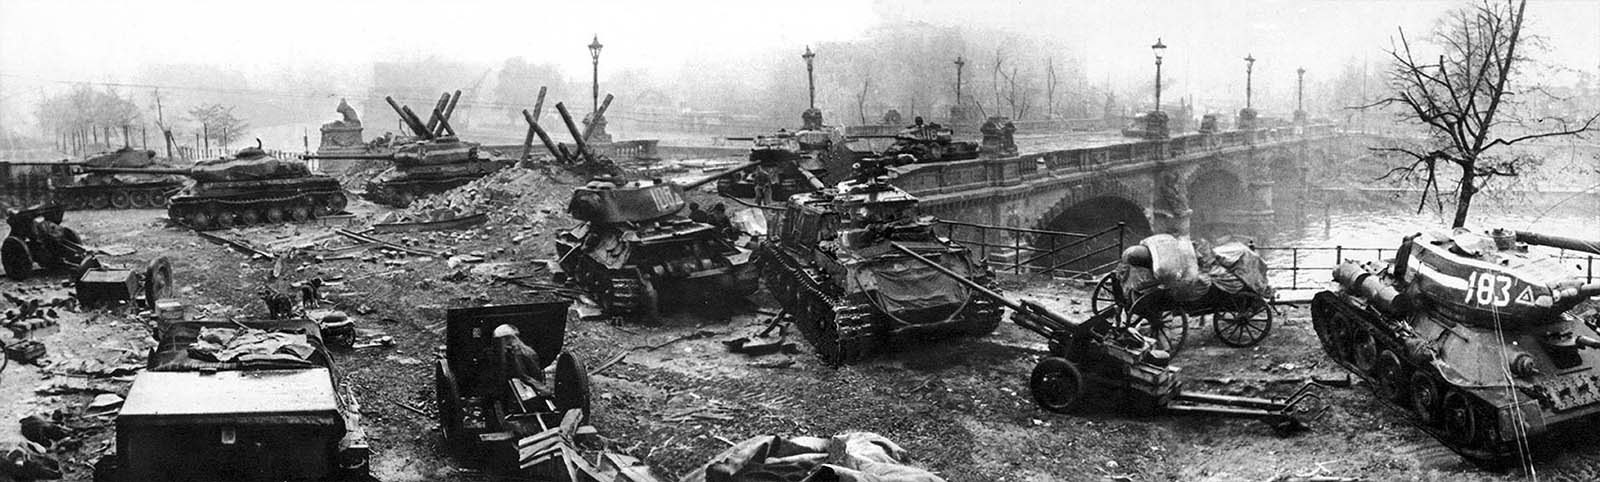 Soviet Tanks by Moltke Bridge